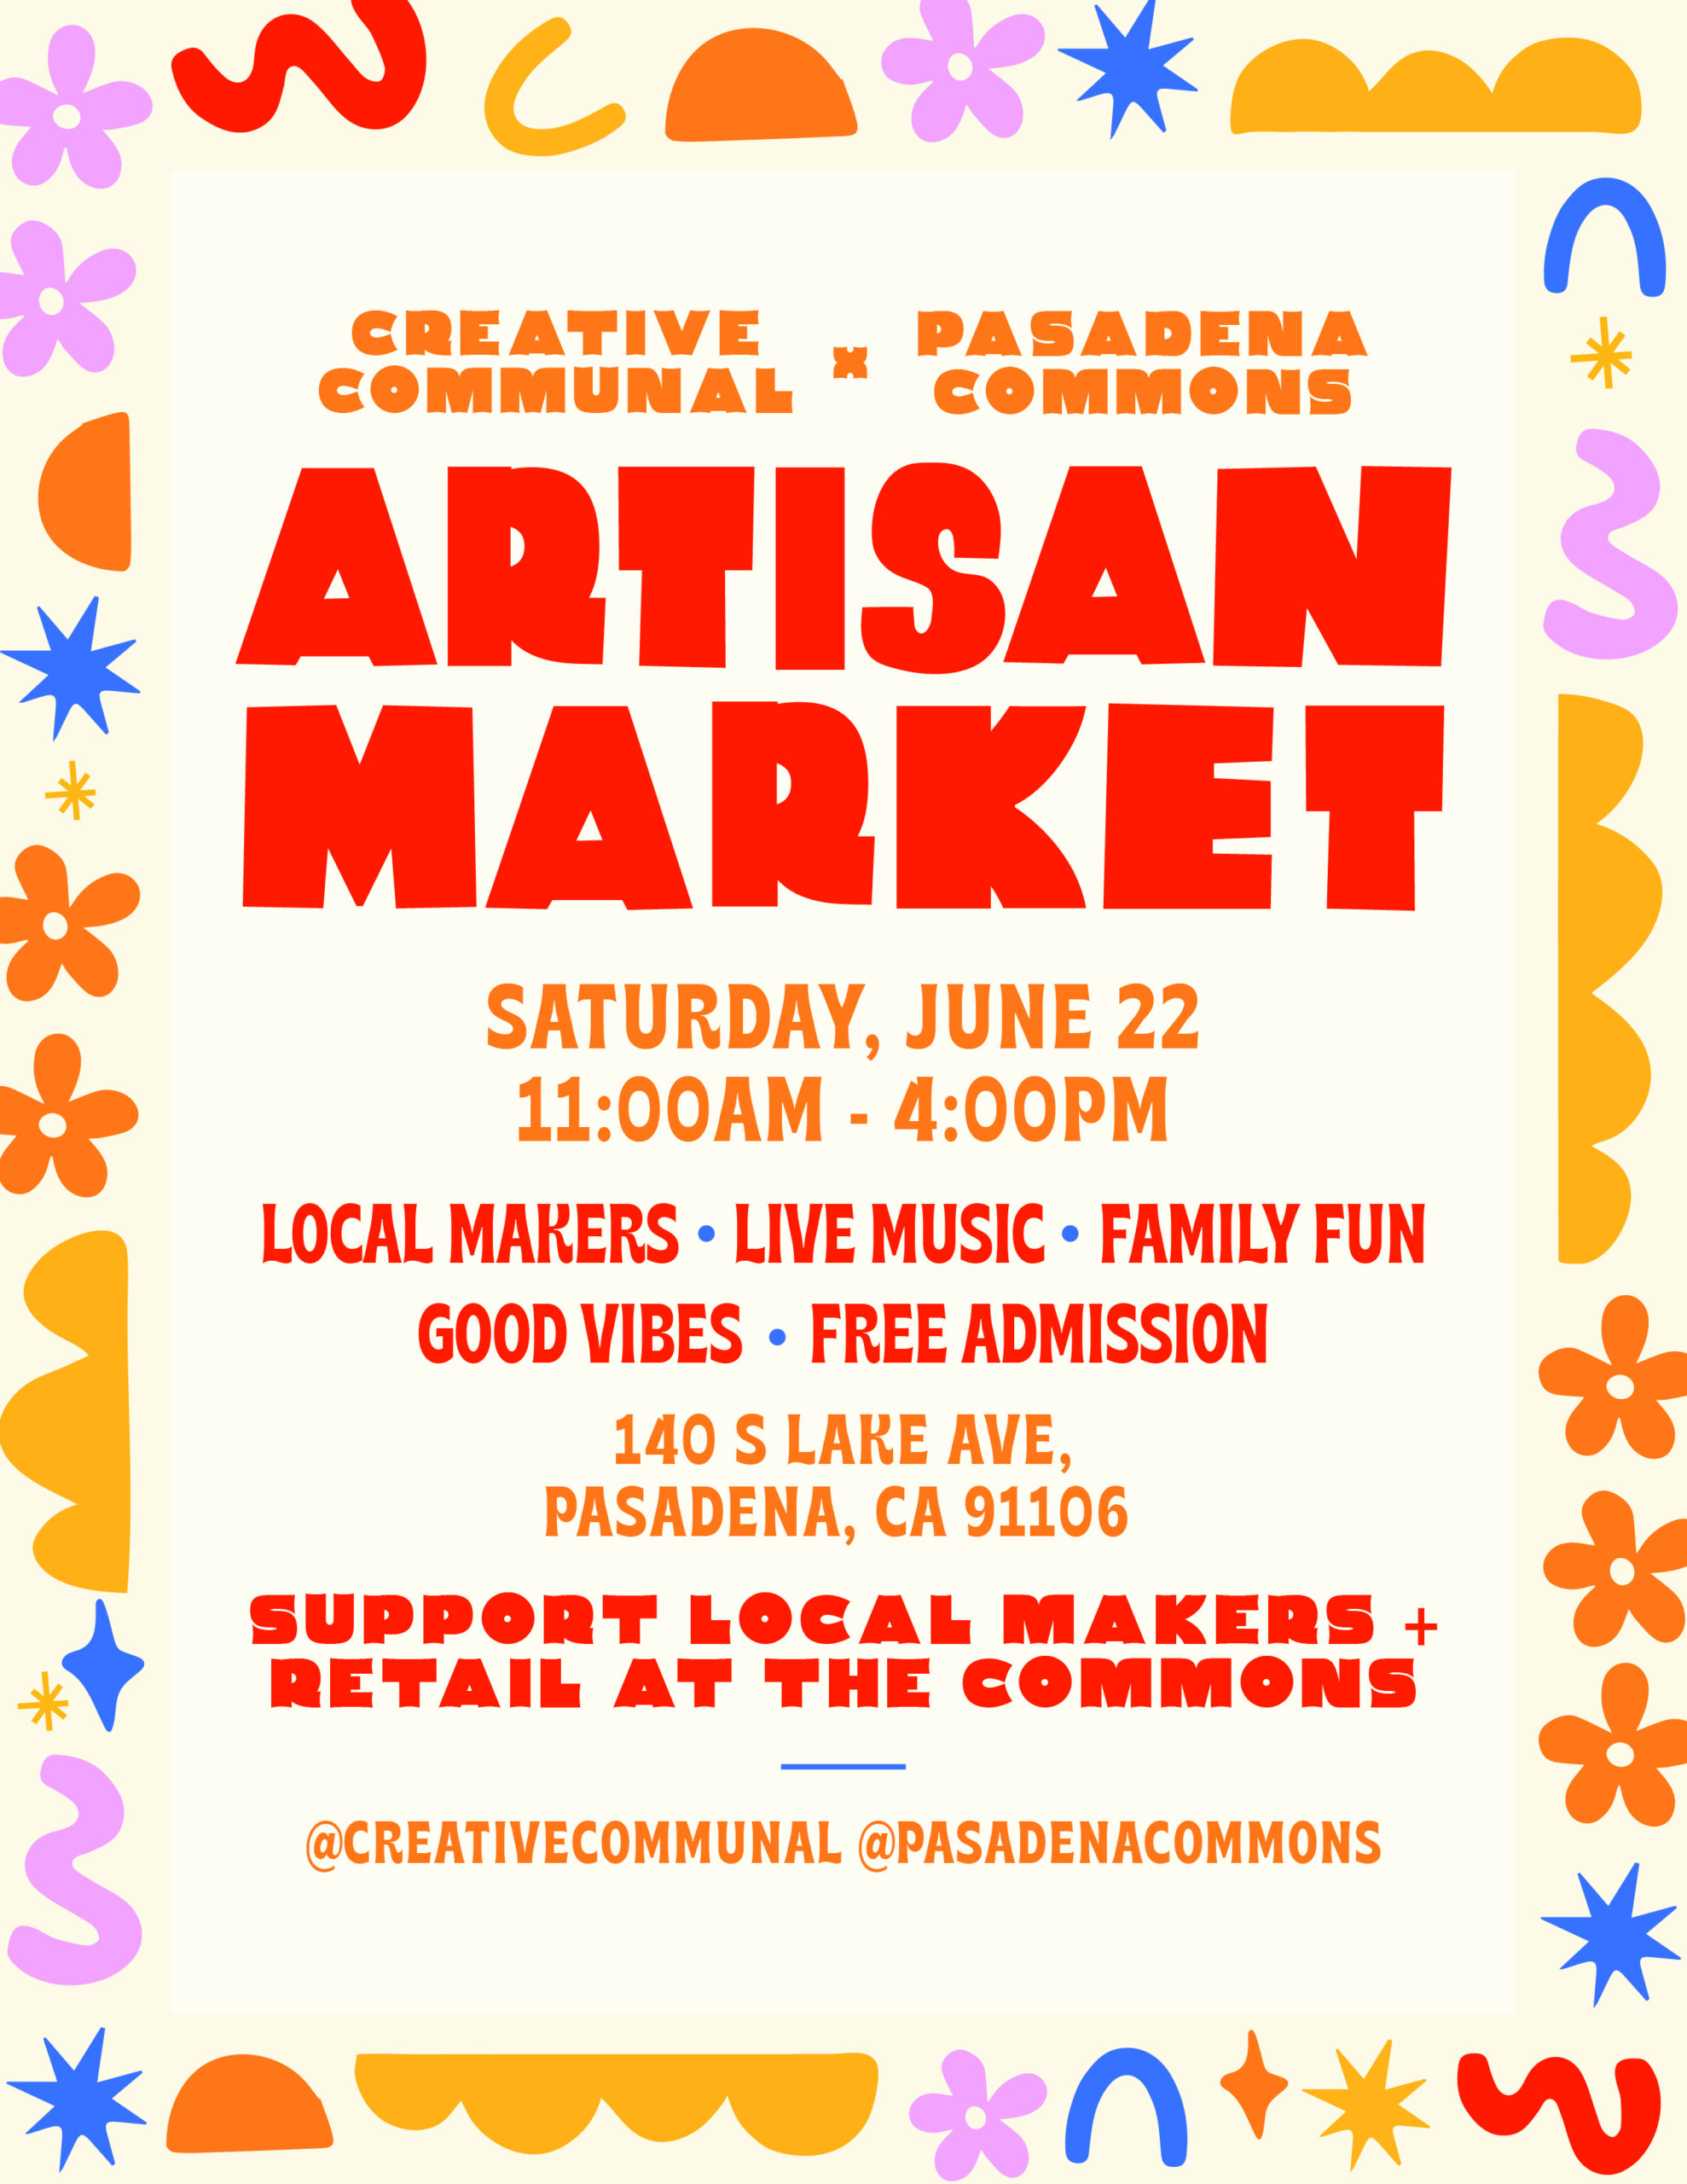 Artisan Market at Pasadena Commons on South Lake Avenue